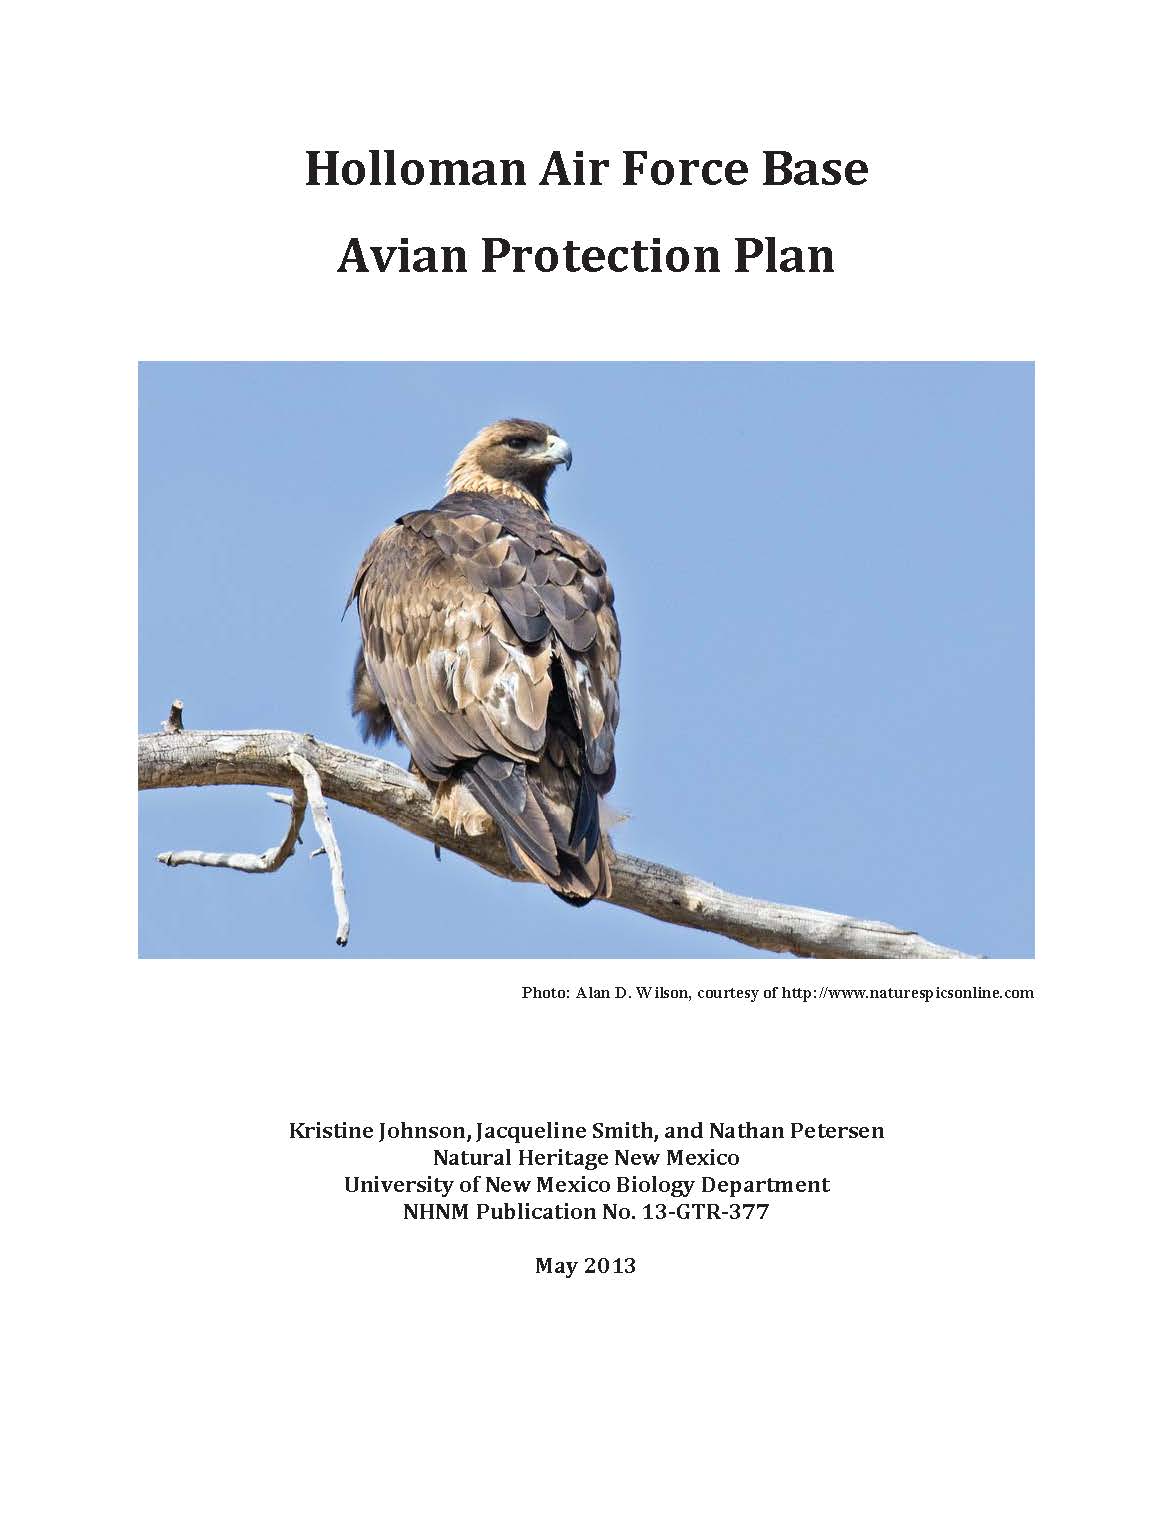 Cover for Holloman Avian Protection Plan